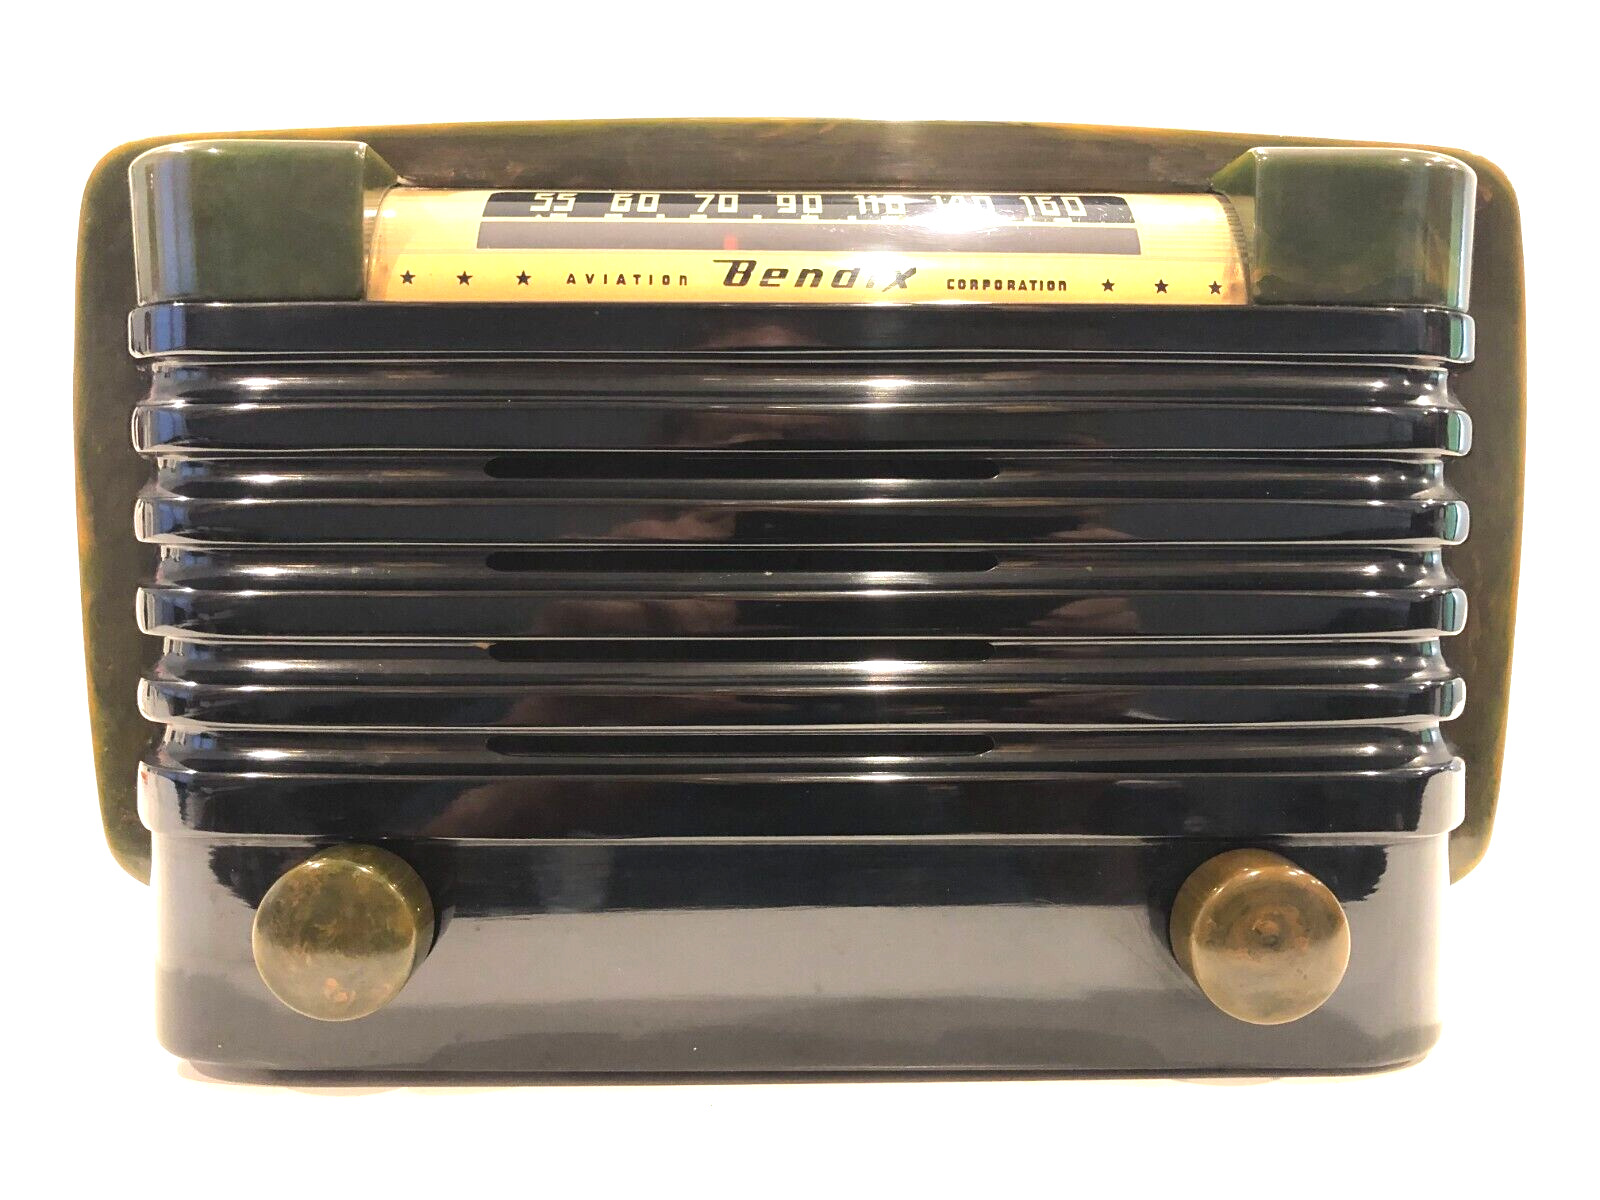 Bendix Marblized Green and Black Catalin Radio c.1946